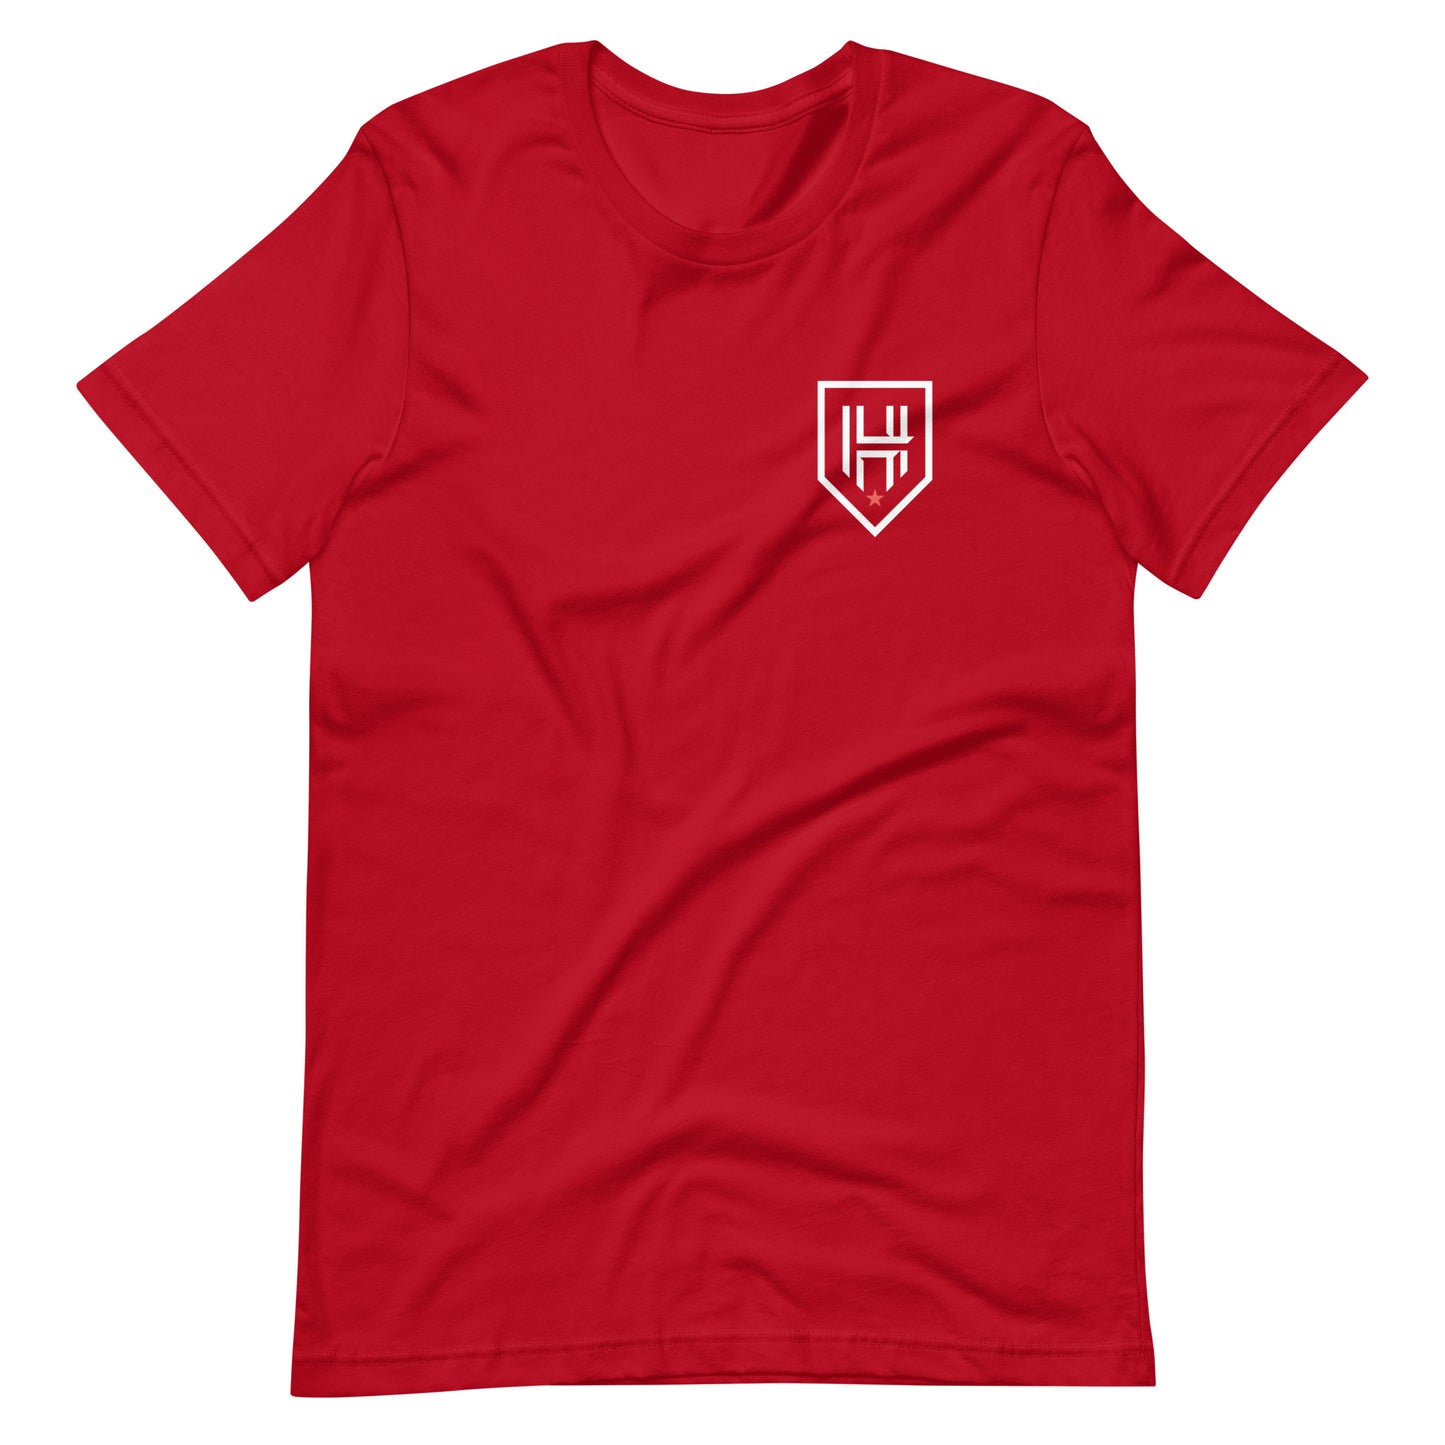 Hogan Shield Adult T-shirt